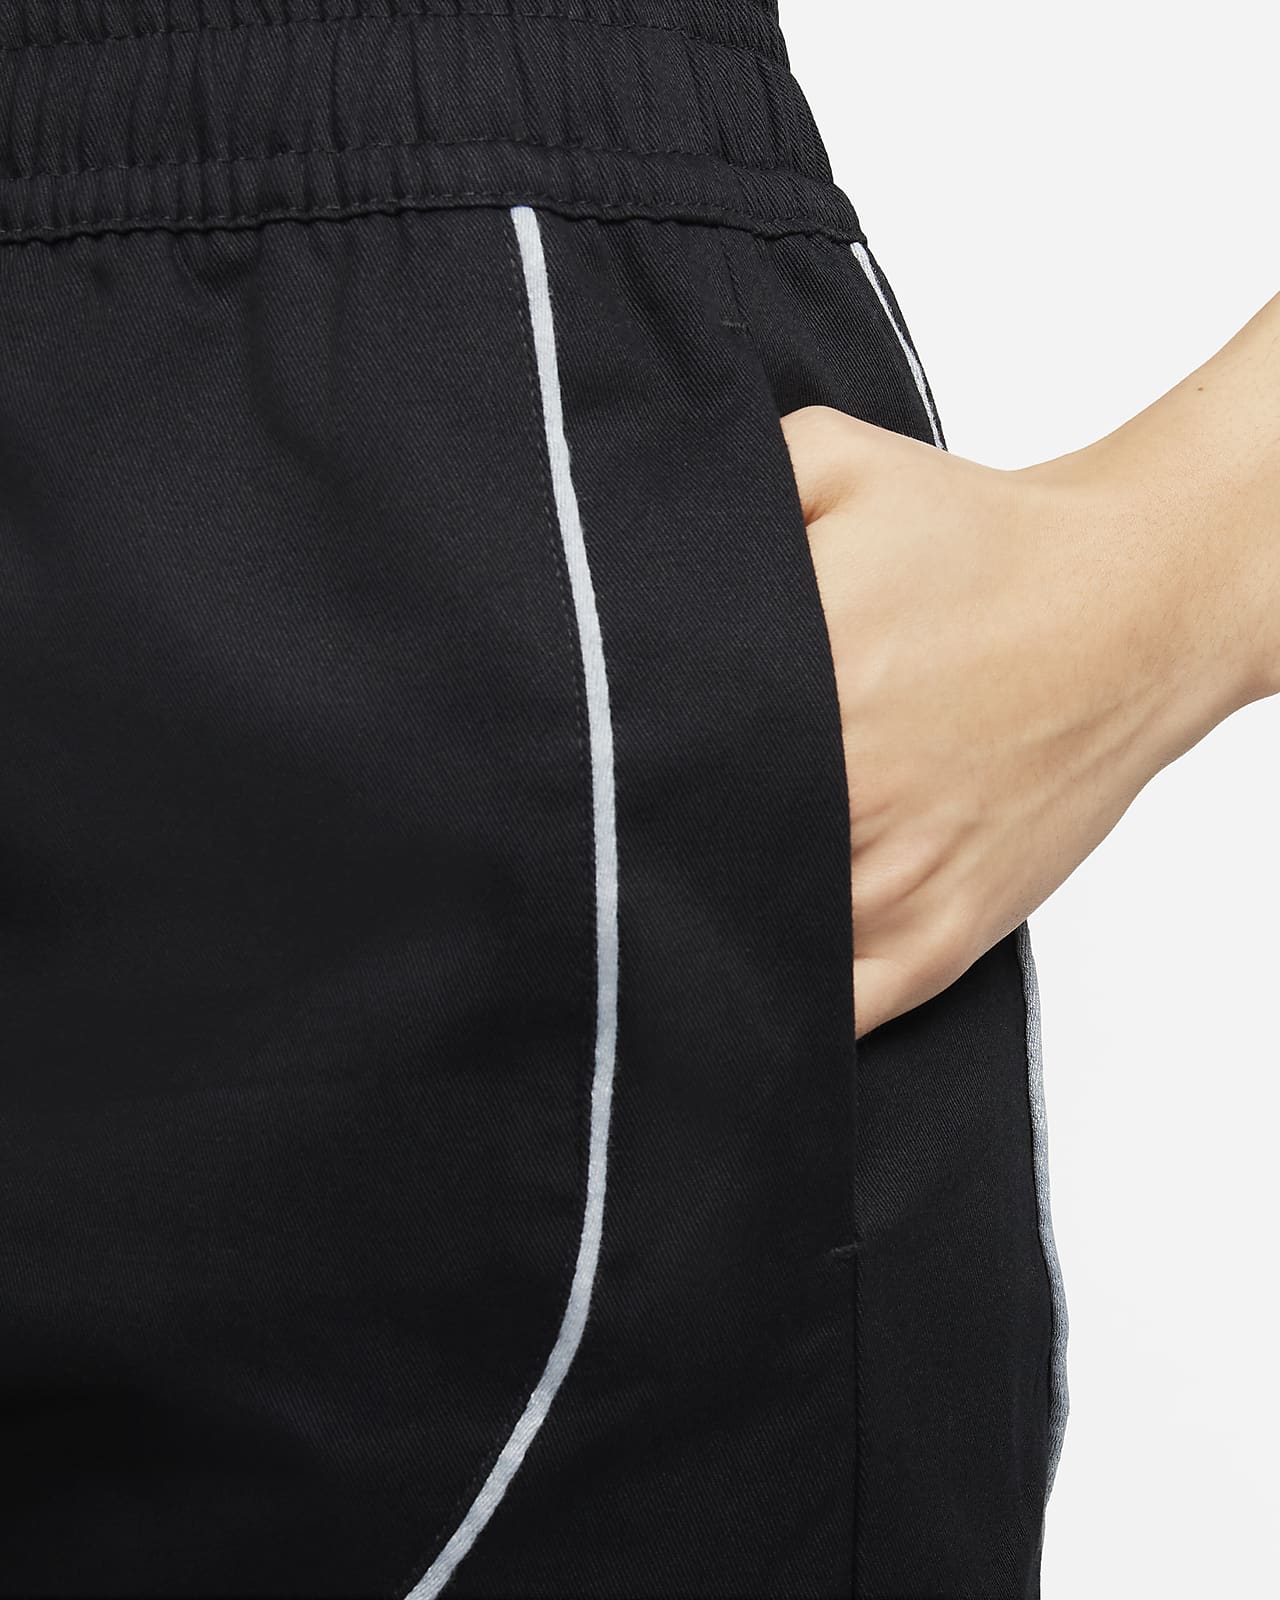 Nike Sportswear Women's High-Waisted Loose Woven Cargo Pants